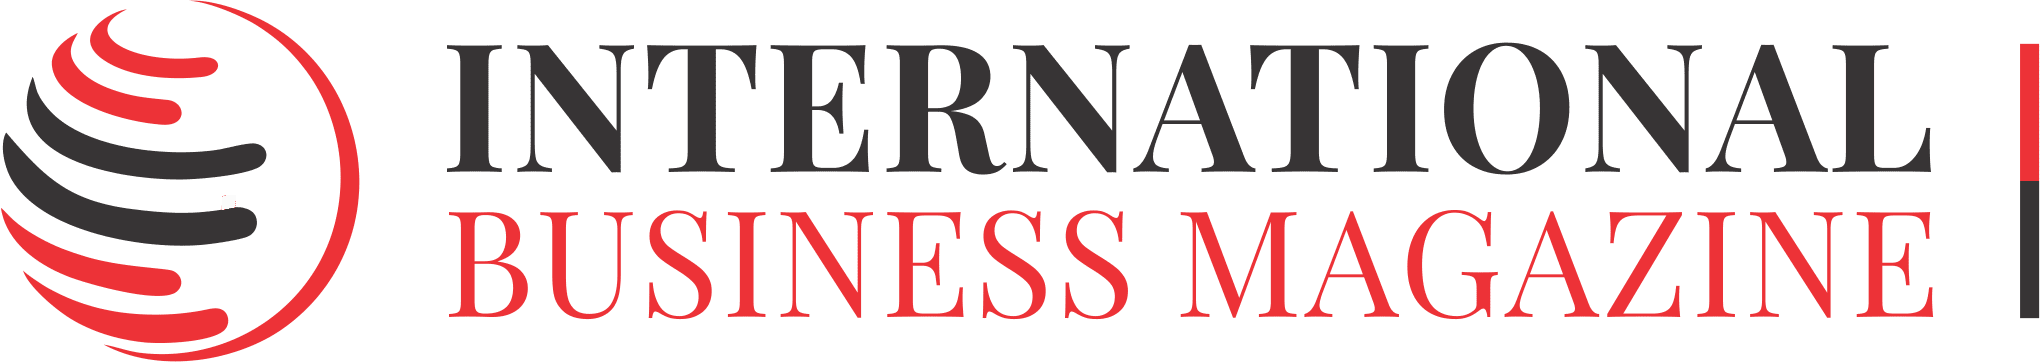 Media sponsor international businessmagazine